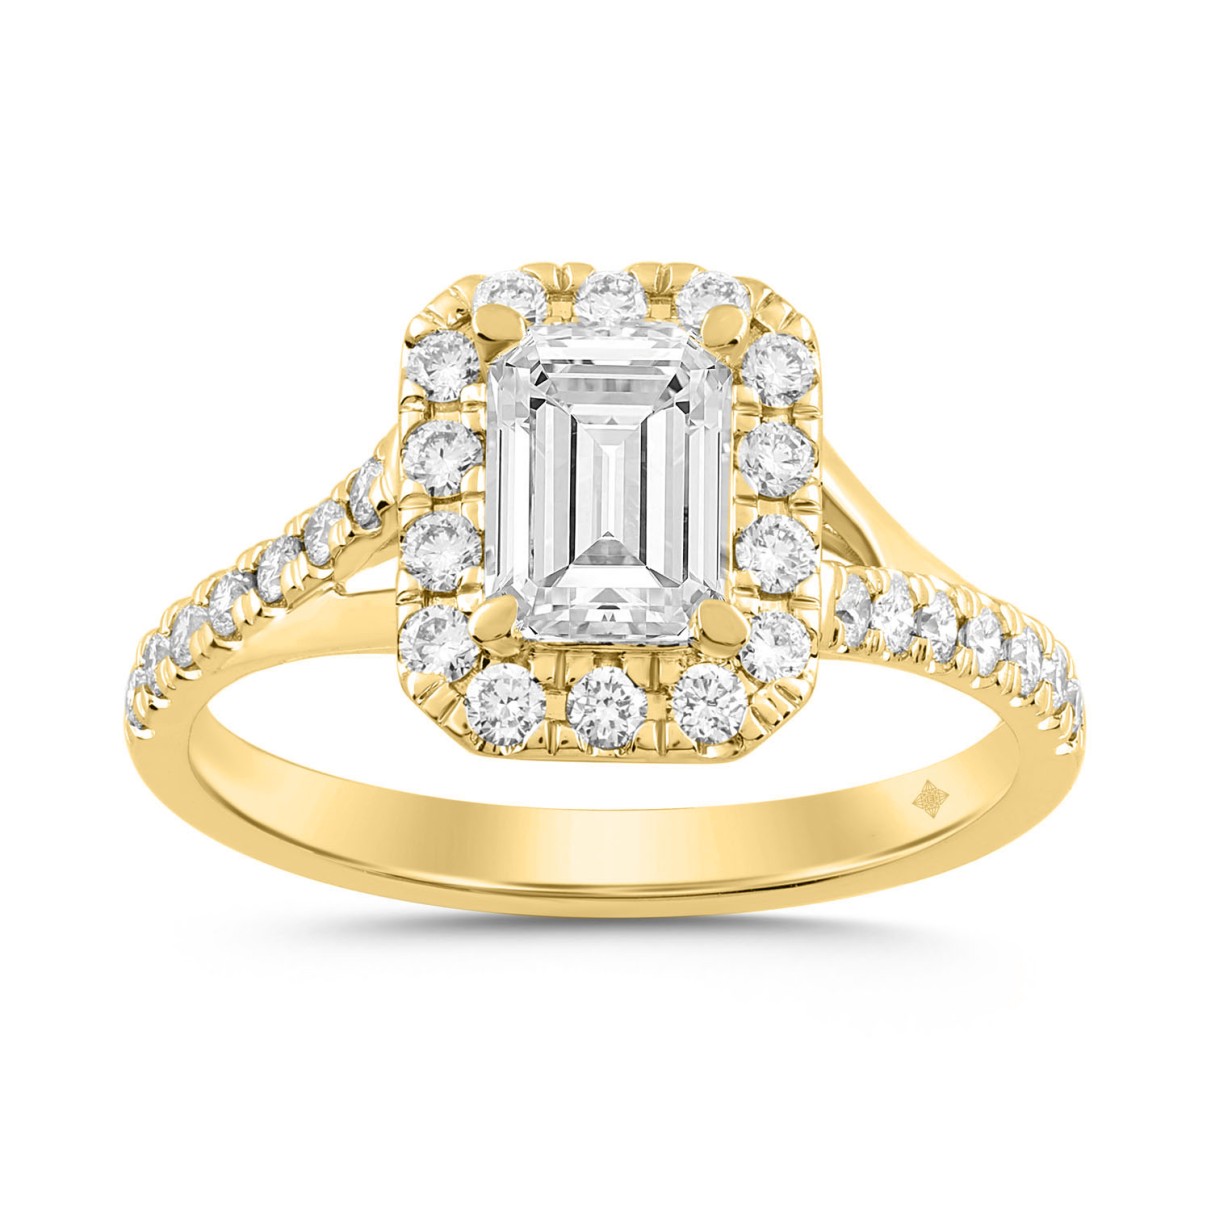 LADIES RING 1 1/2CT ROUND/EMERALD DIAMOND 18K YELLOW GOLD (CENTER STONE EMERALD DIAMOND 1CT)